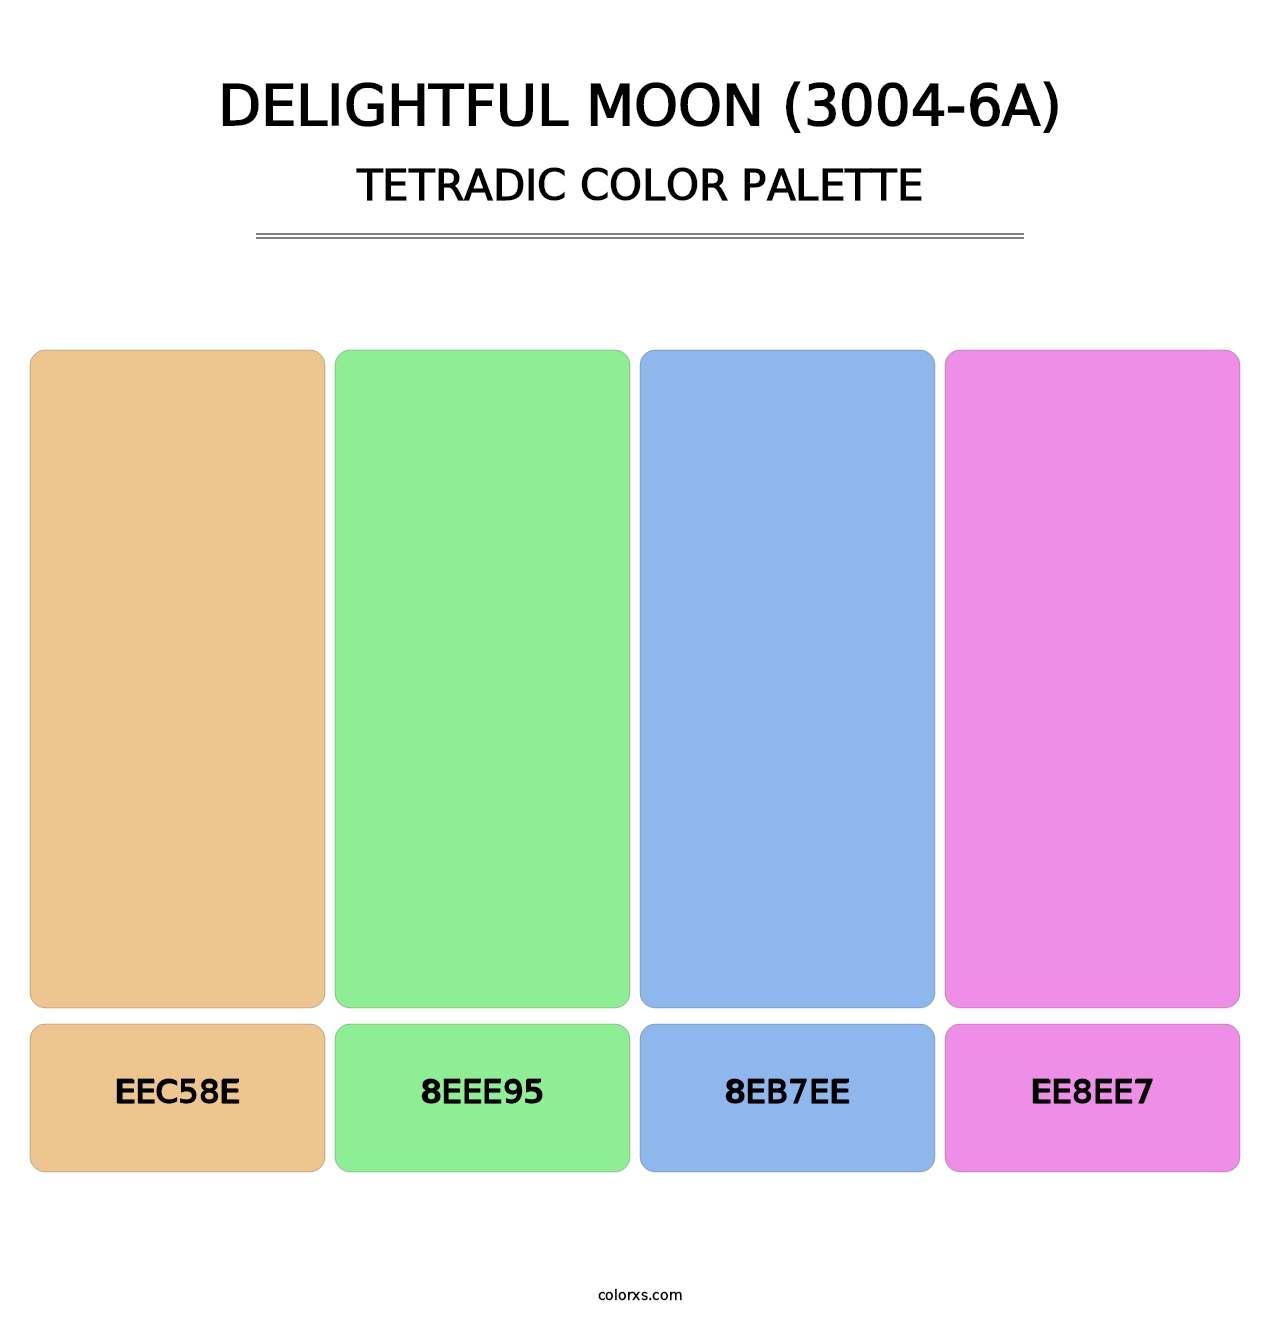 Delightful Moon (3004-6A) - Tetradic Color Palette